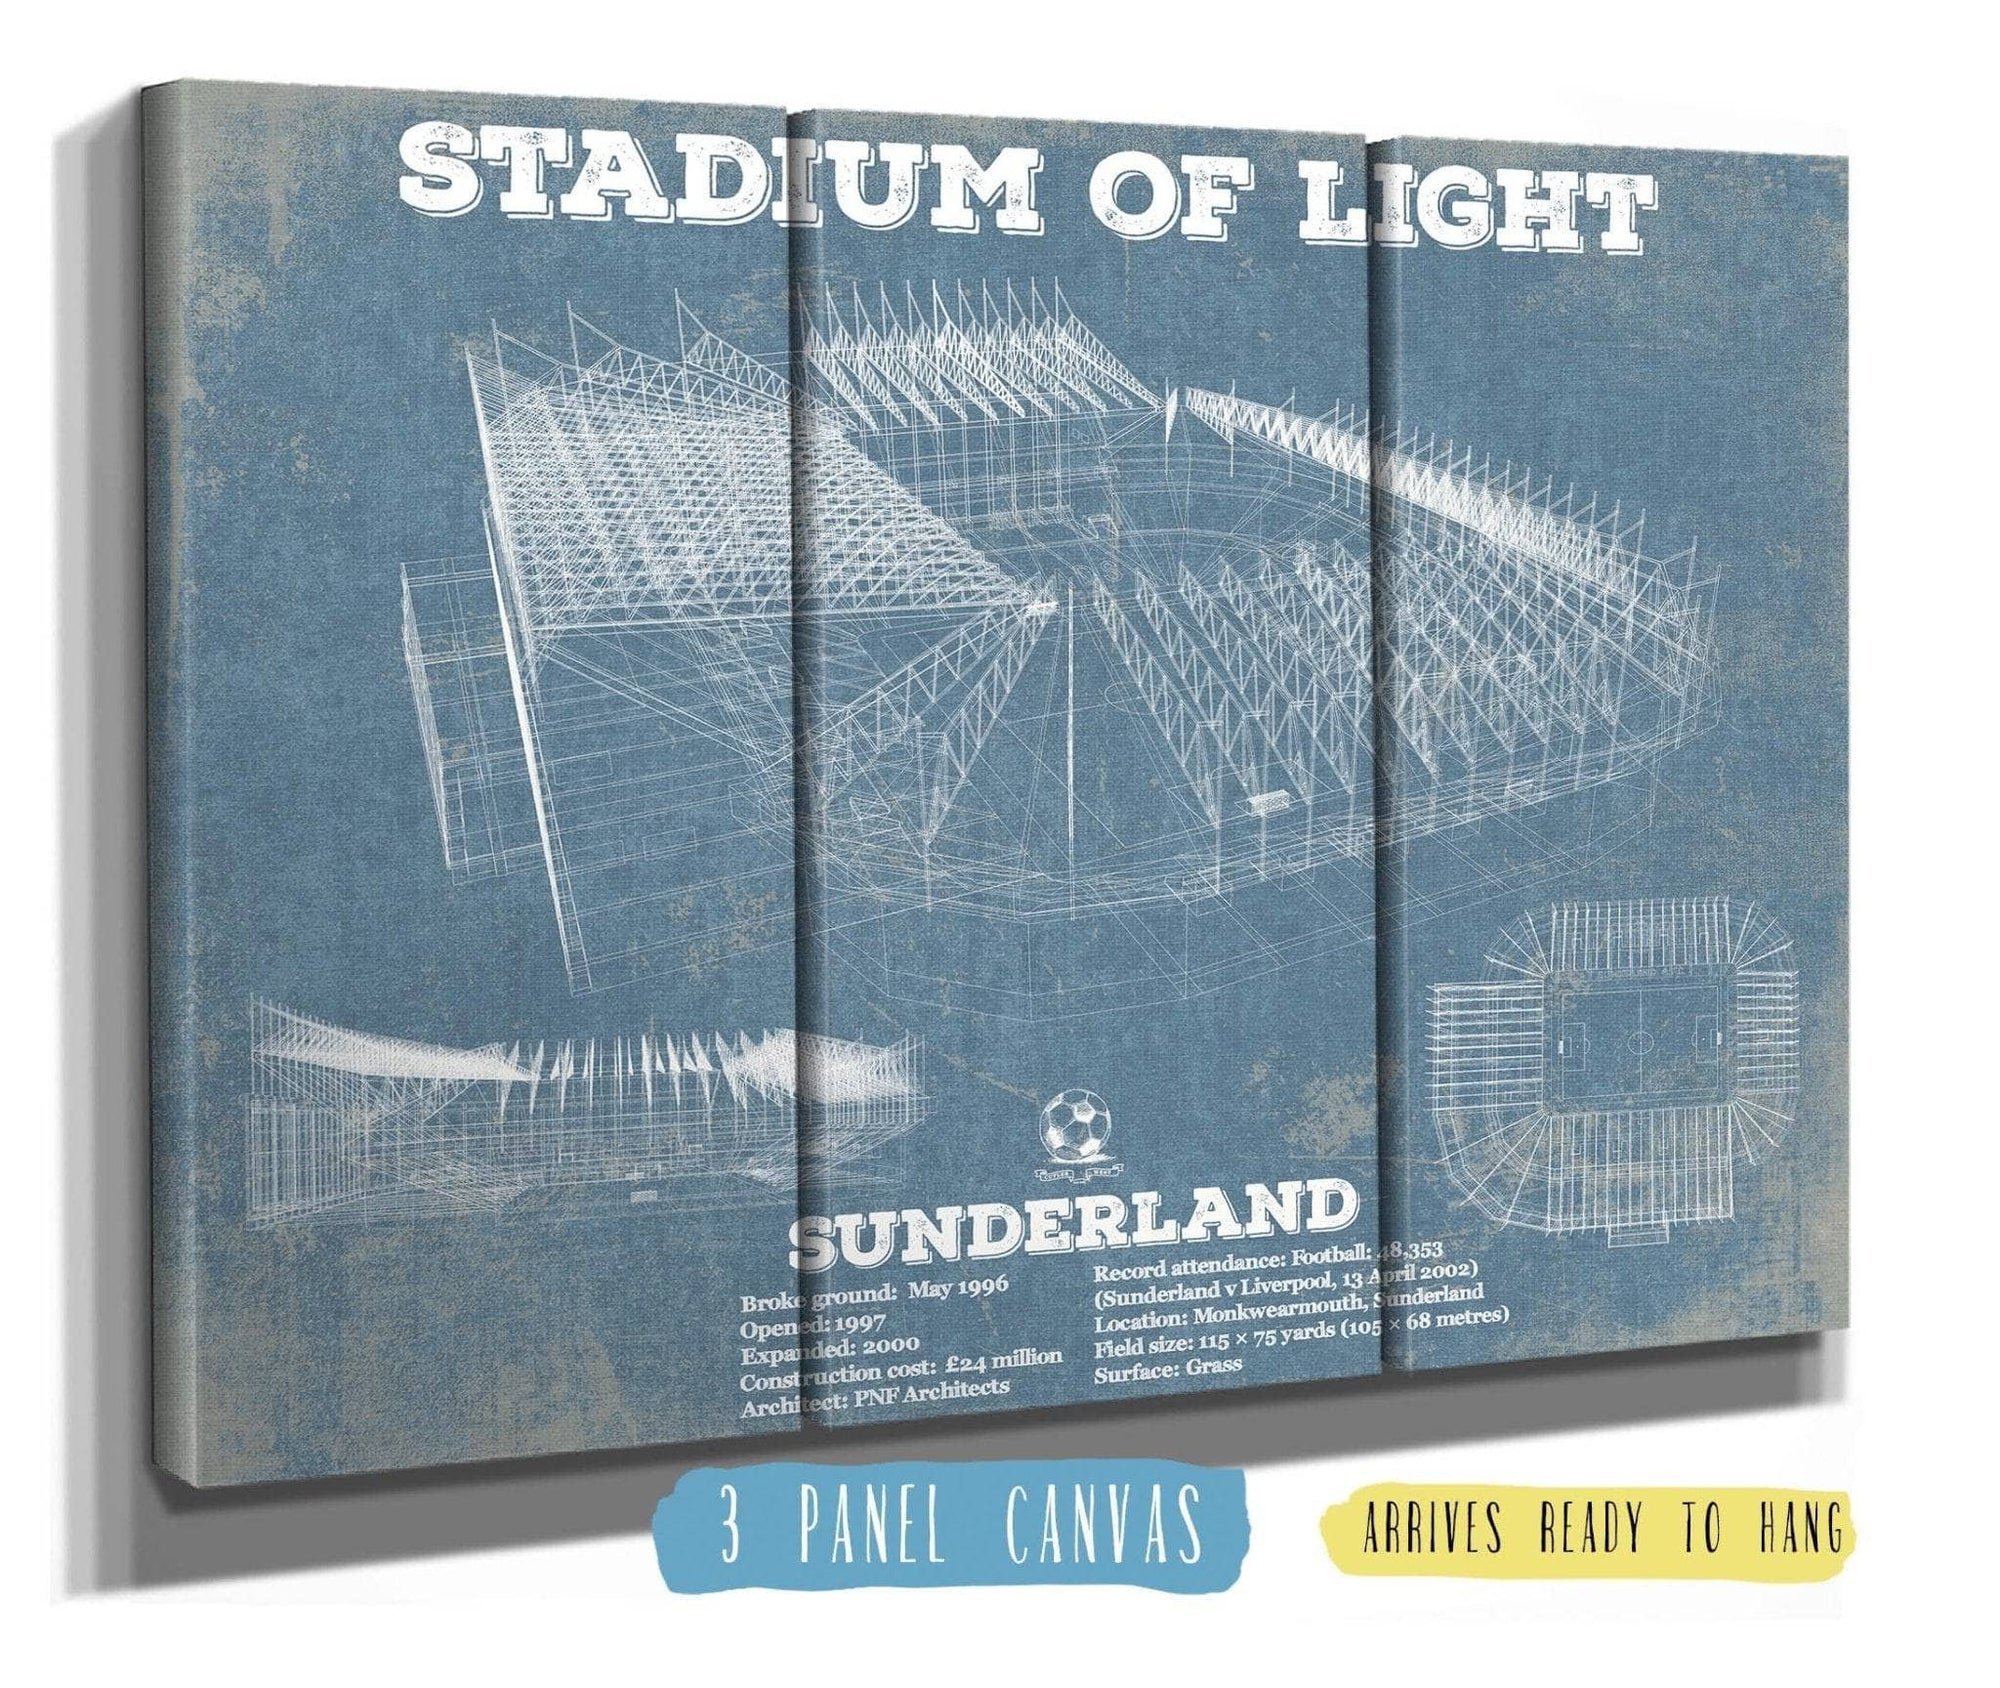 Cutler West Soccer Collection 48" x 32" / 3 Panel Canvas Wrap Sunderland AFC Stadium Of Light Soccer Print 845000162_31100